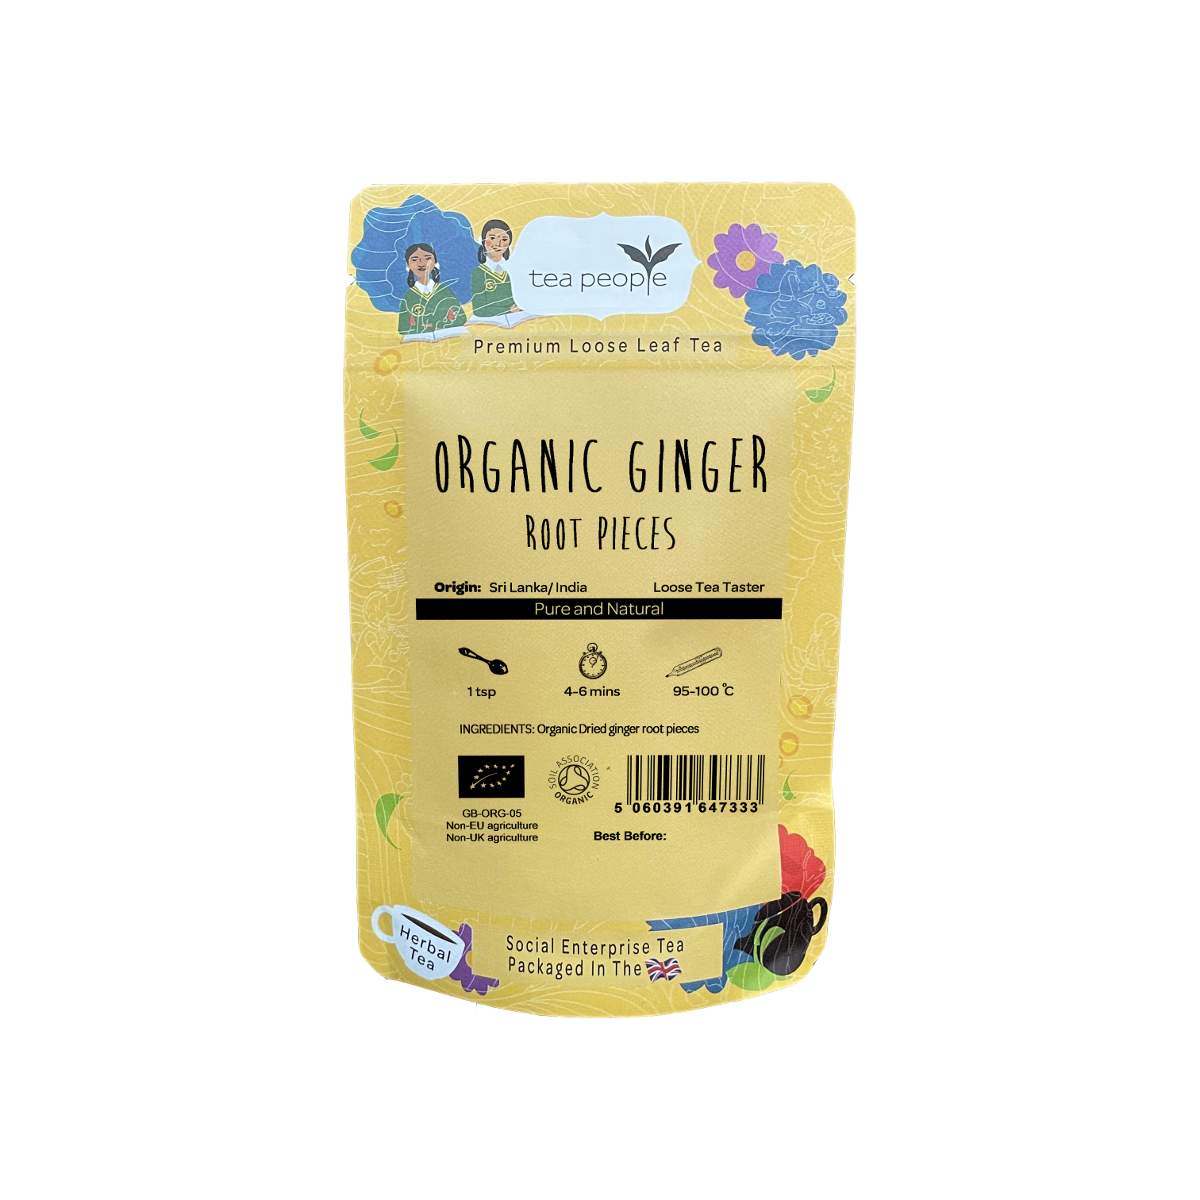 Organic Ginger - Loose Herbal Tea - Loose Tea Taster Pack